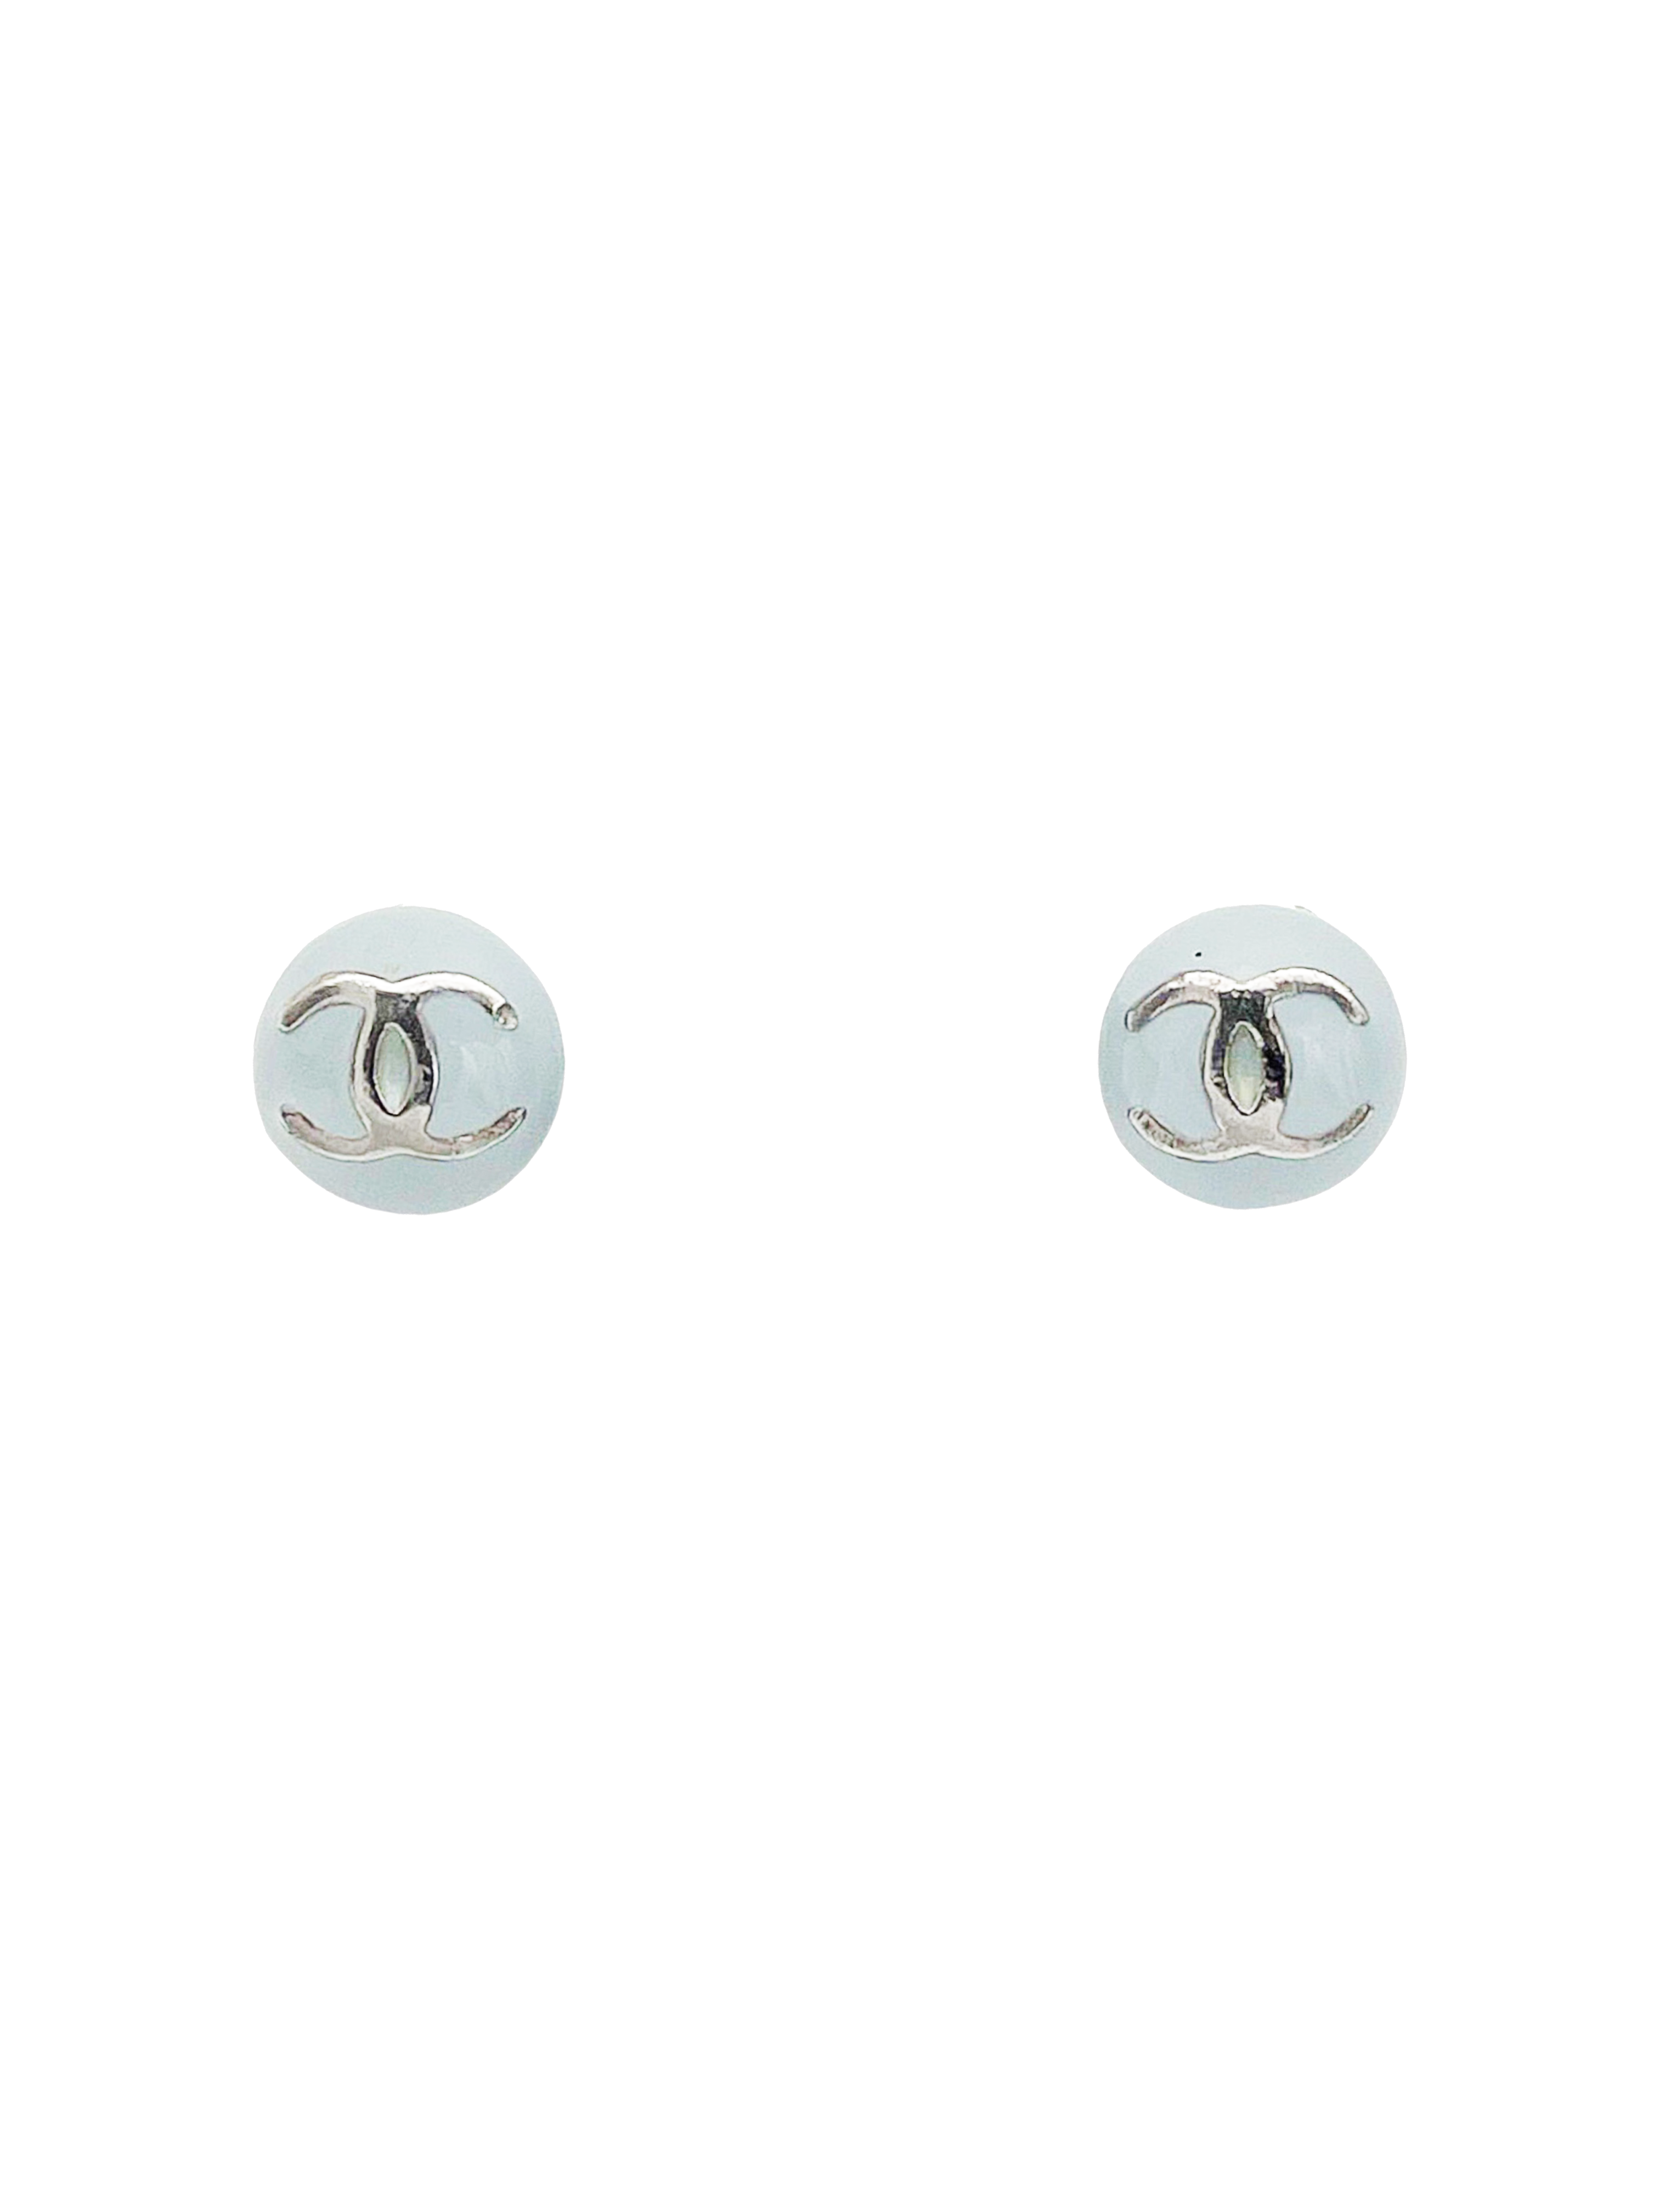 Chanel Enamel Earring Studs Black Round Small studs – LLBazar